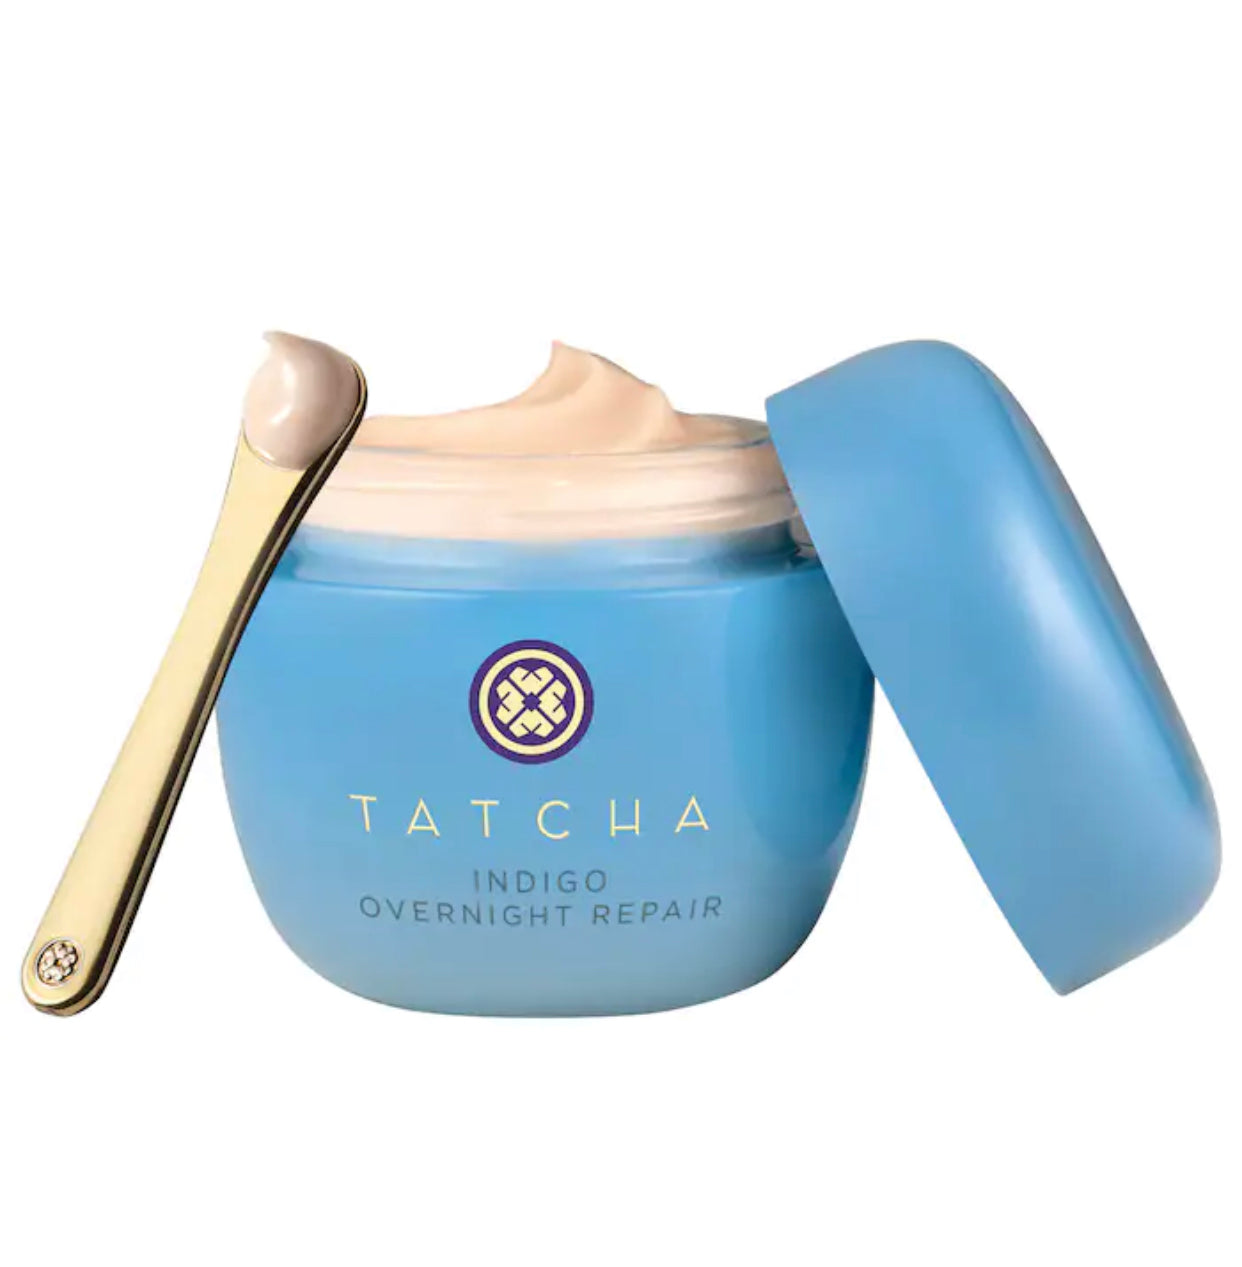 TATCHA, Indigo Overnight Repair Serum in Cream Treatment